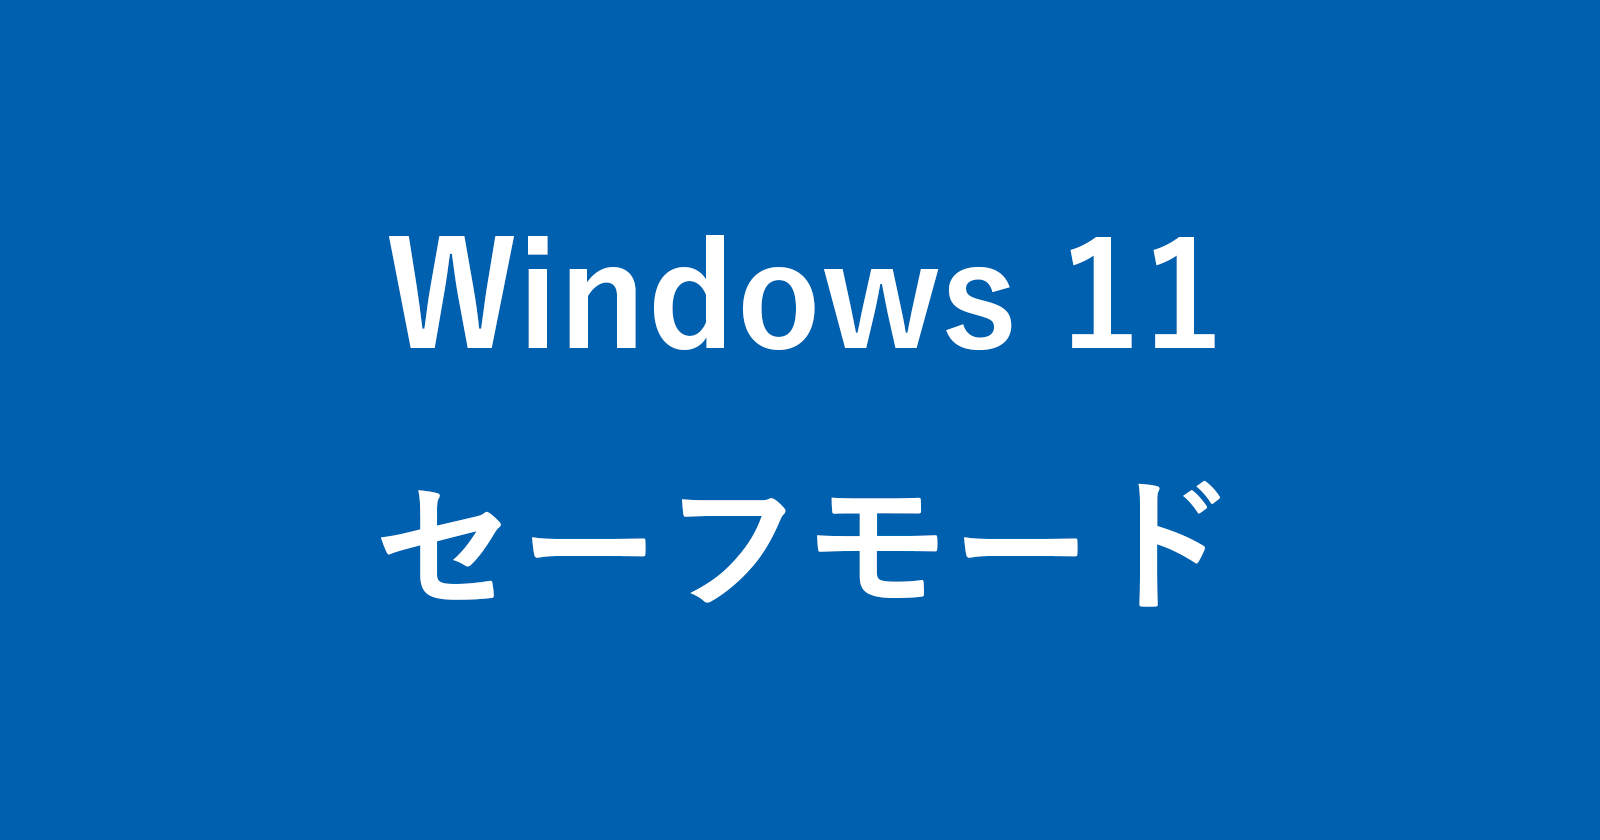 windows 11 safe mode